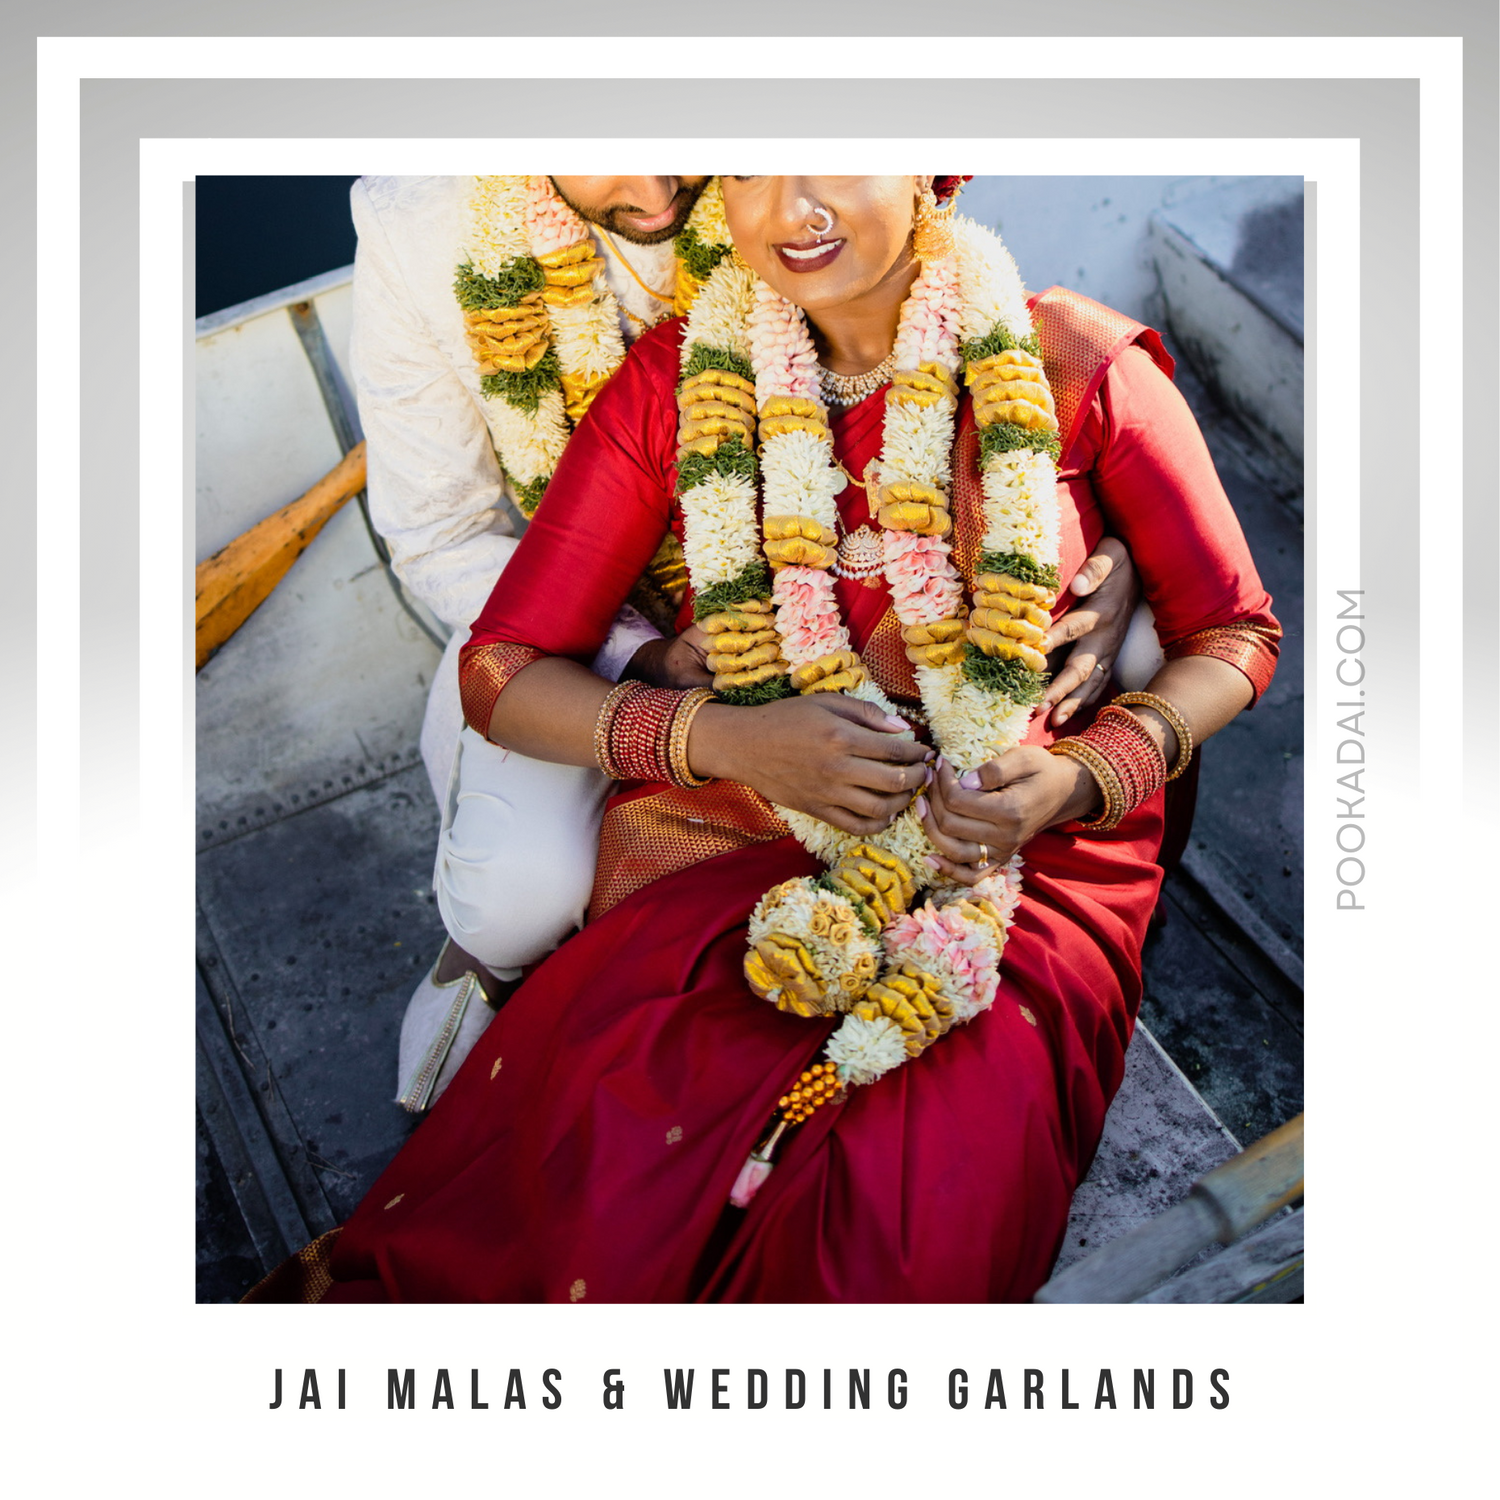 Jai Malas & Wedding Garlands